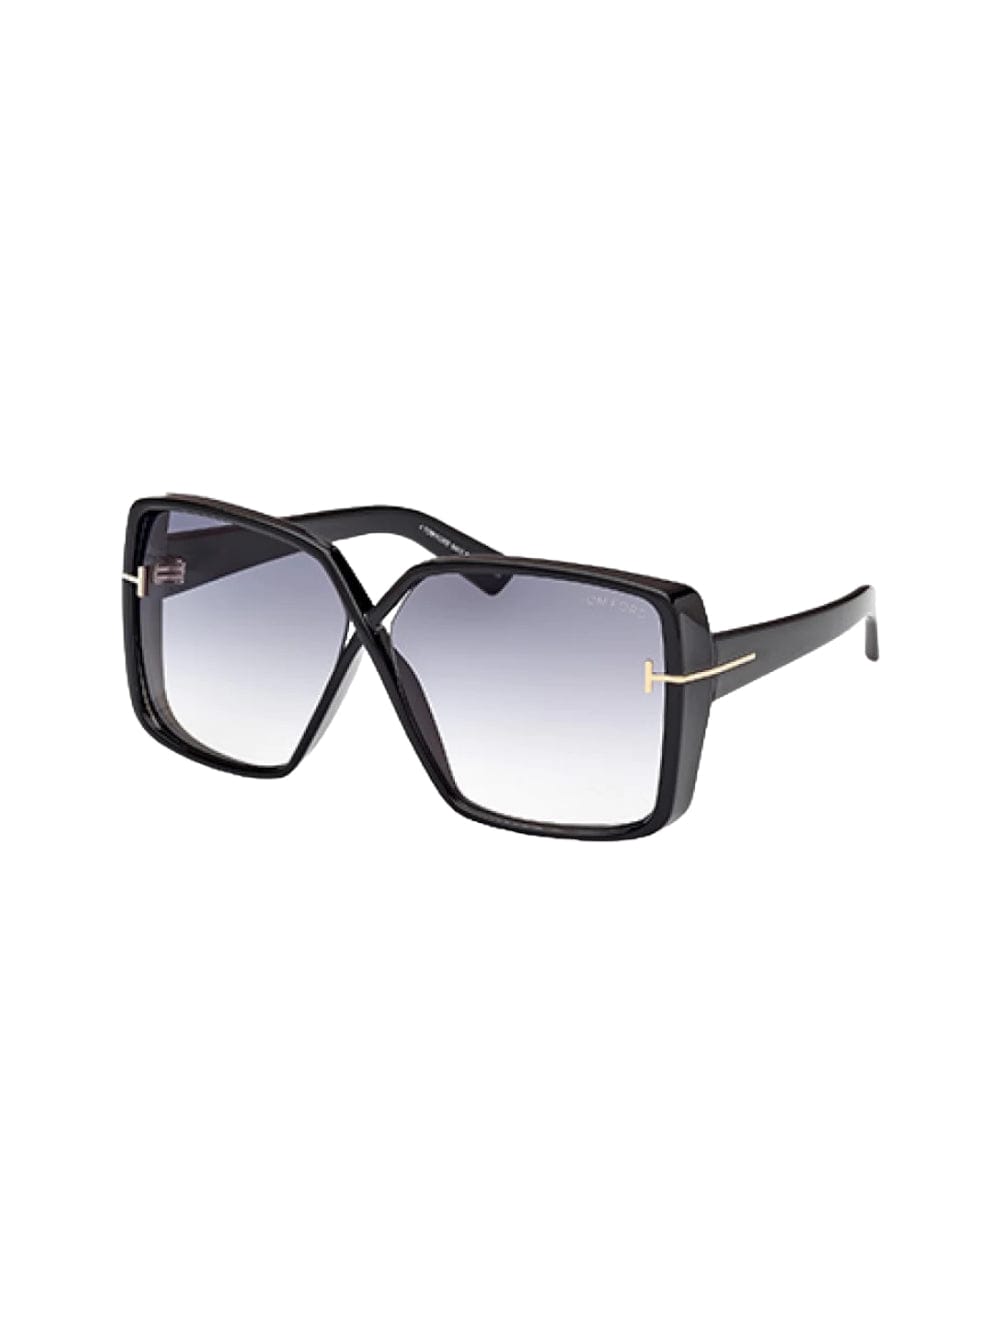 Tom Ford Tf 1117 /s Sunglasses In Black